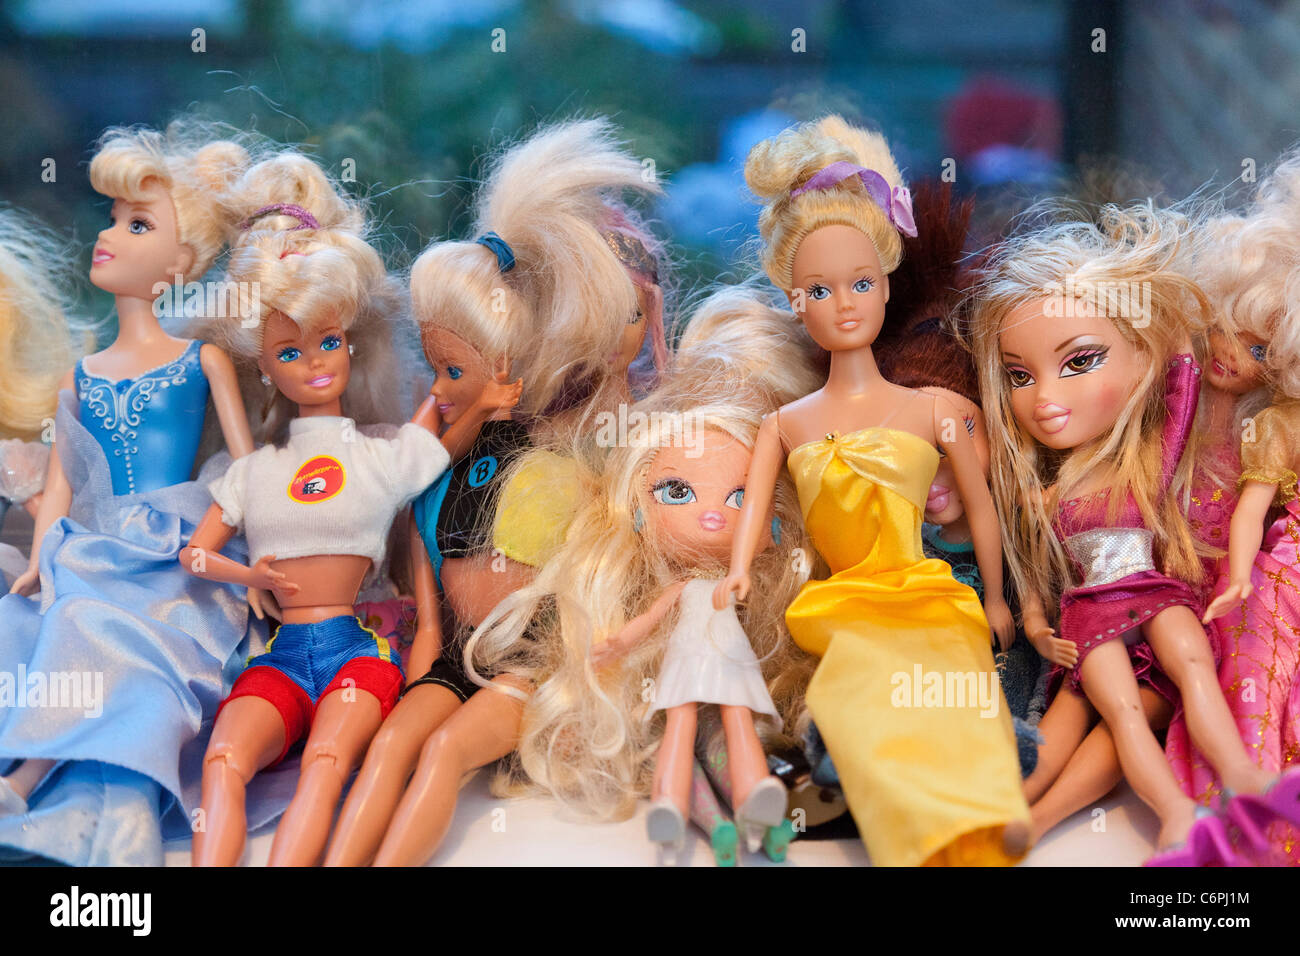 Bratz dolls hi-res stock photography and images - Alamy